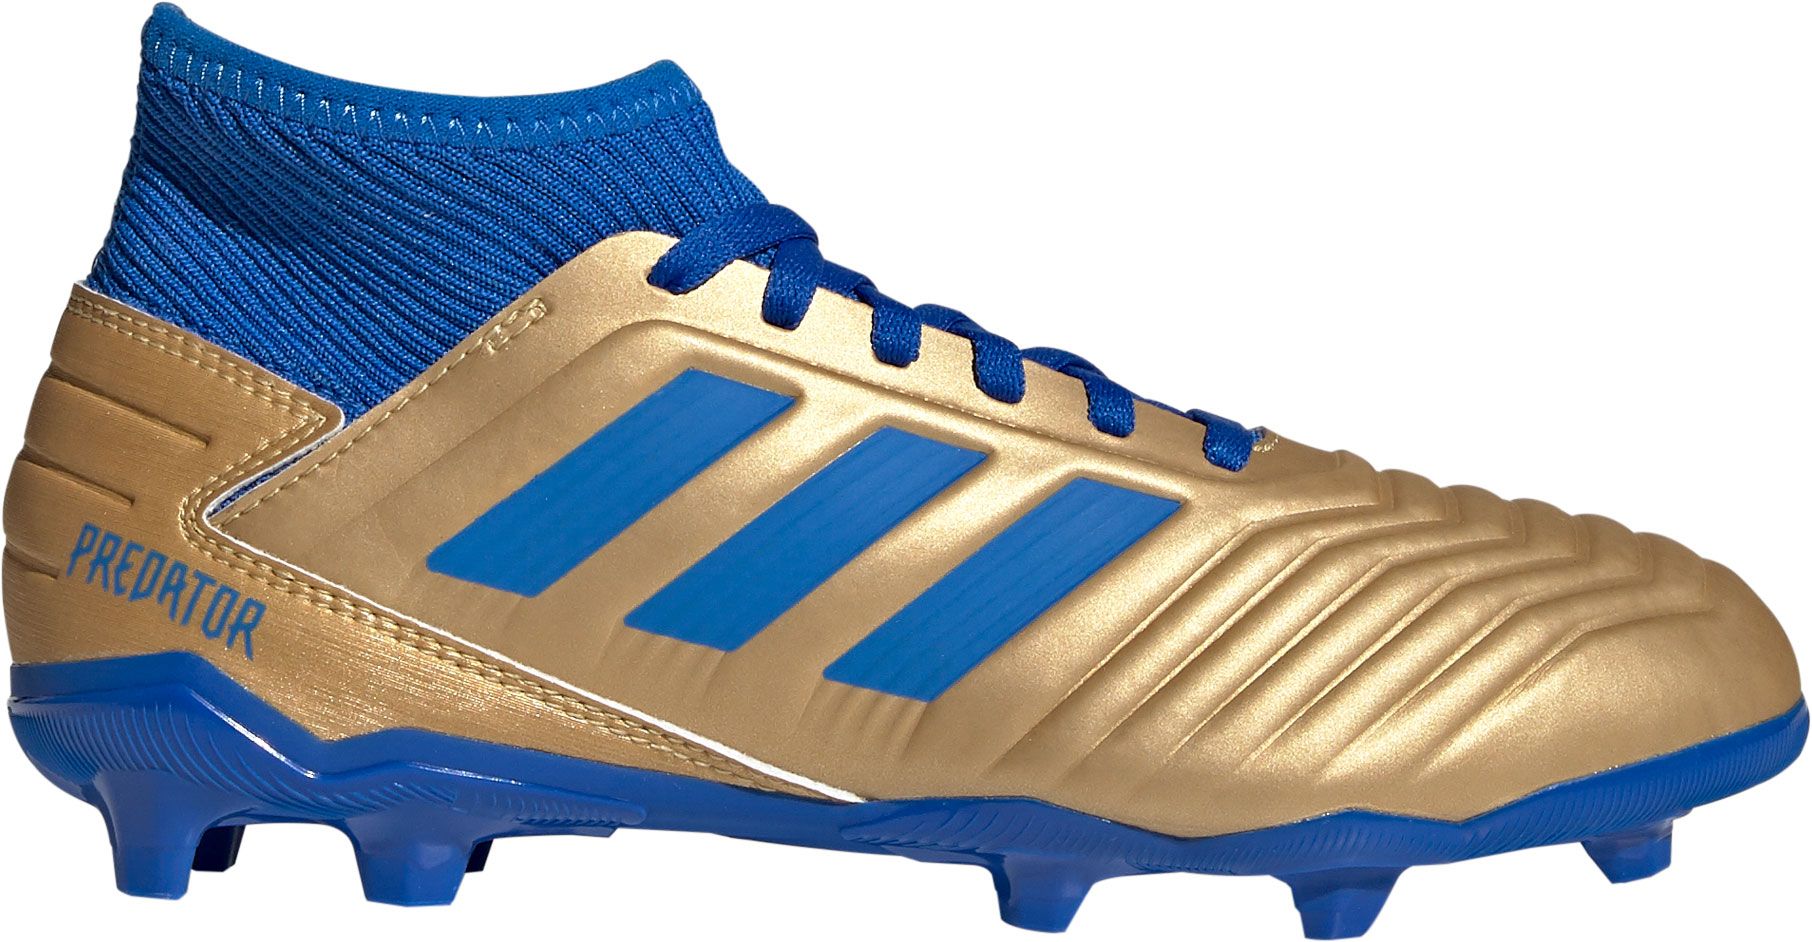 adidas predator 19.3 gold and blue